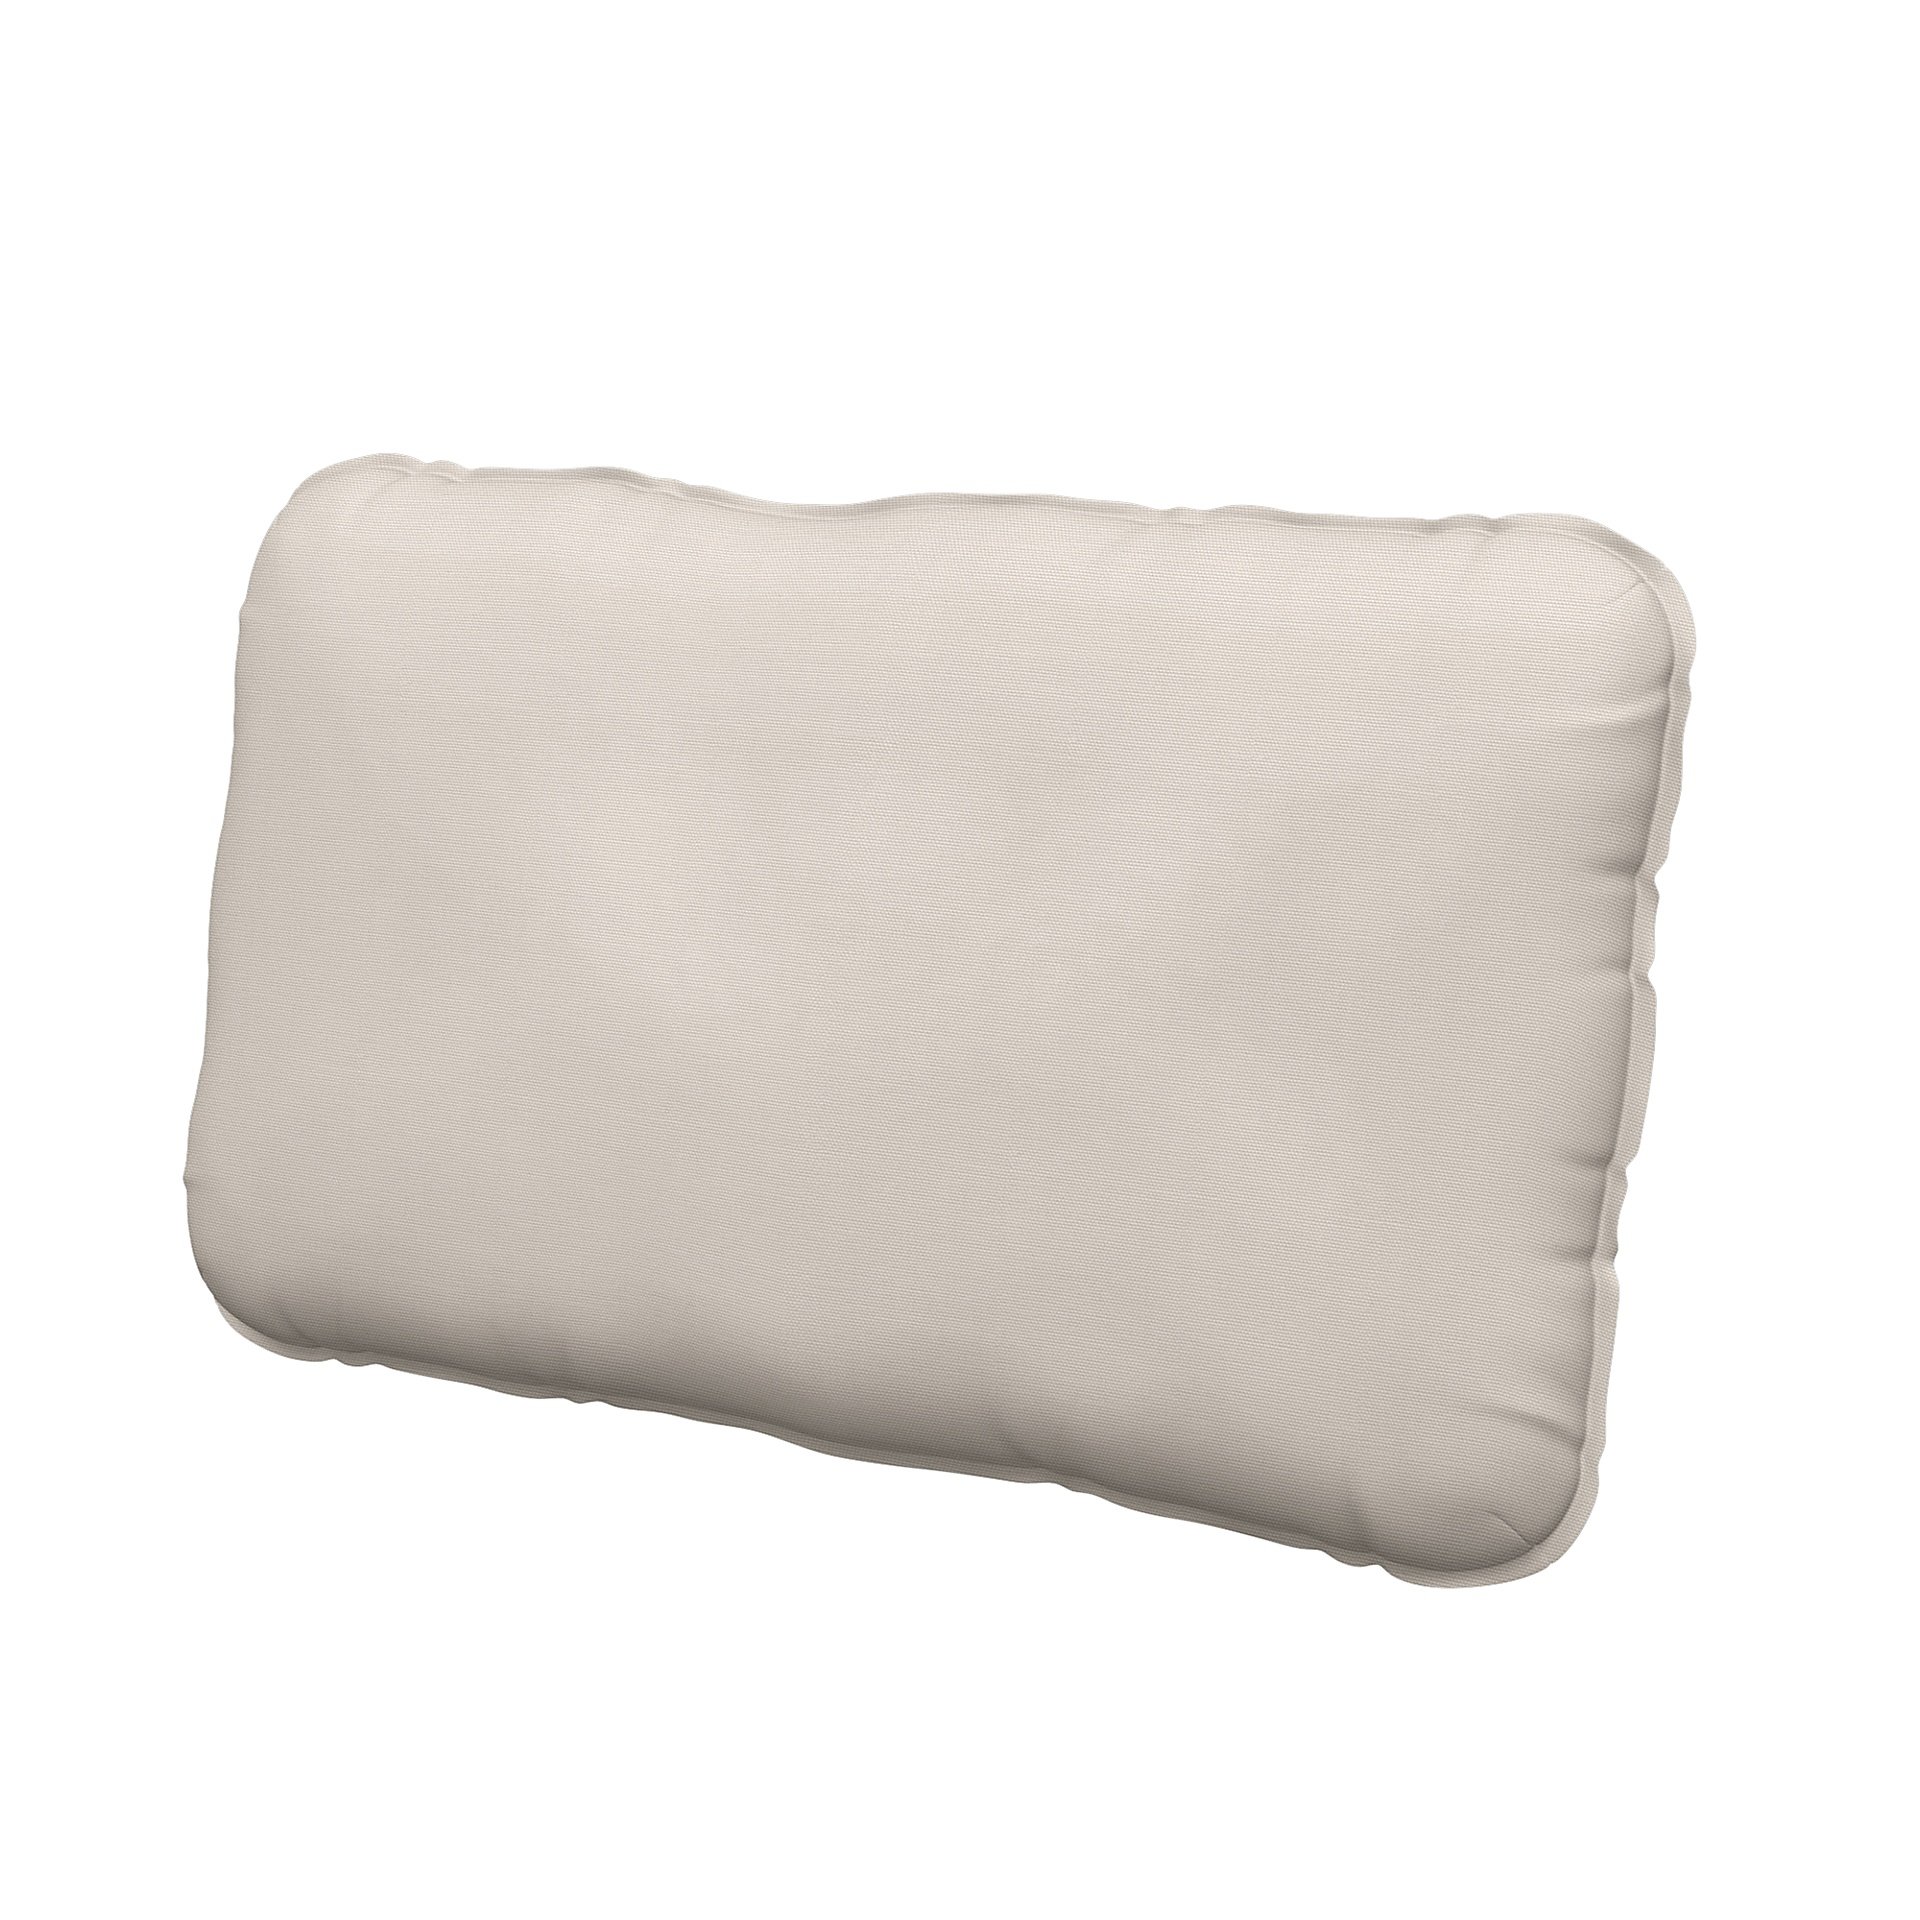 IKEA - Vallentuna back cushion cover 40x75cm, Soft White, Cotton - Bemz